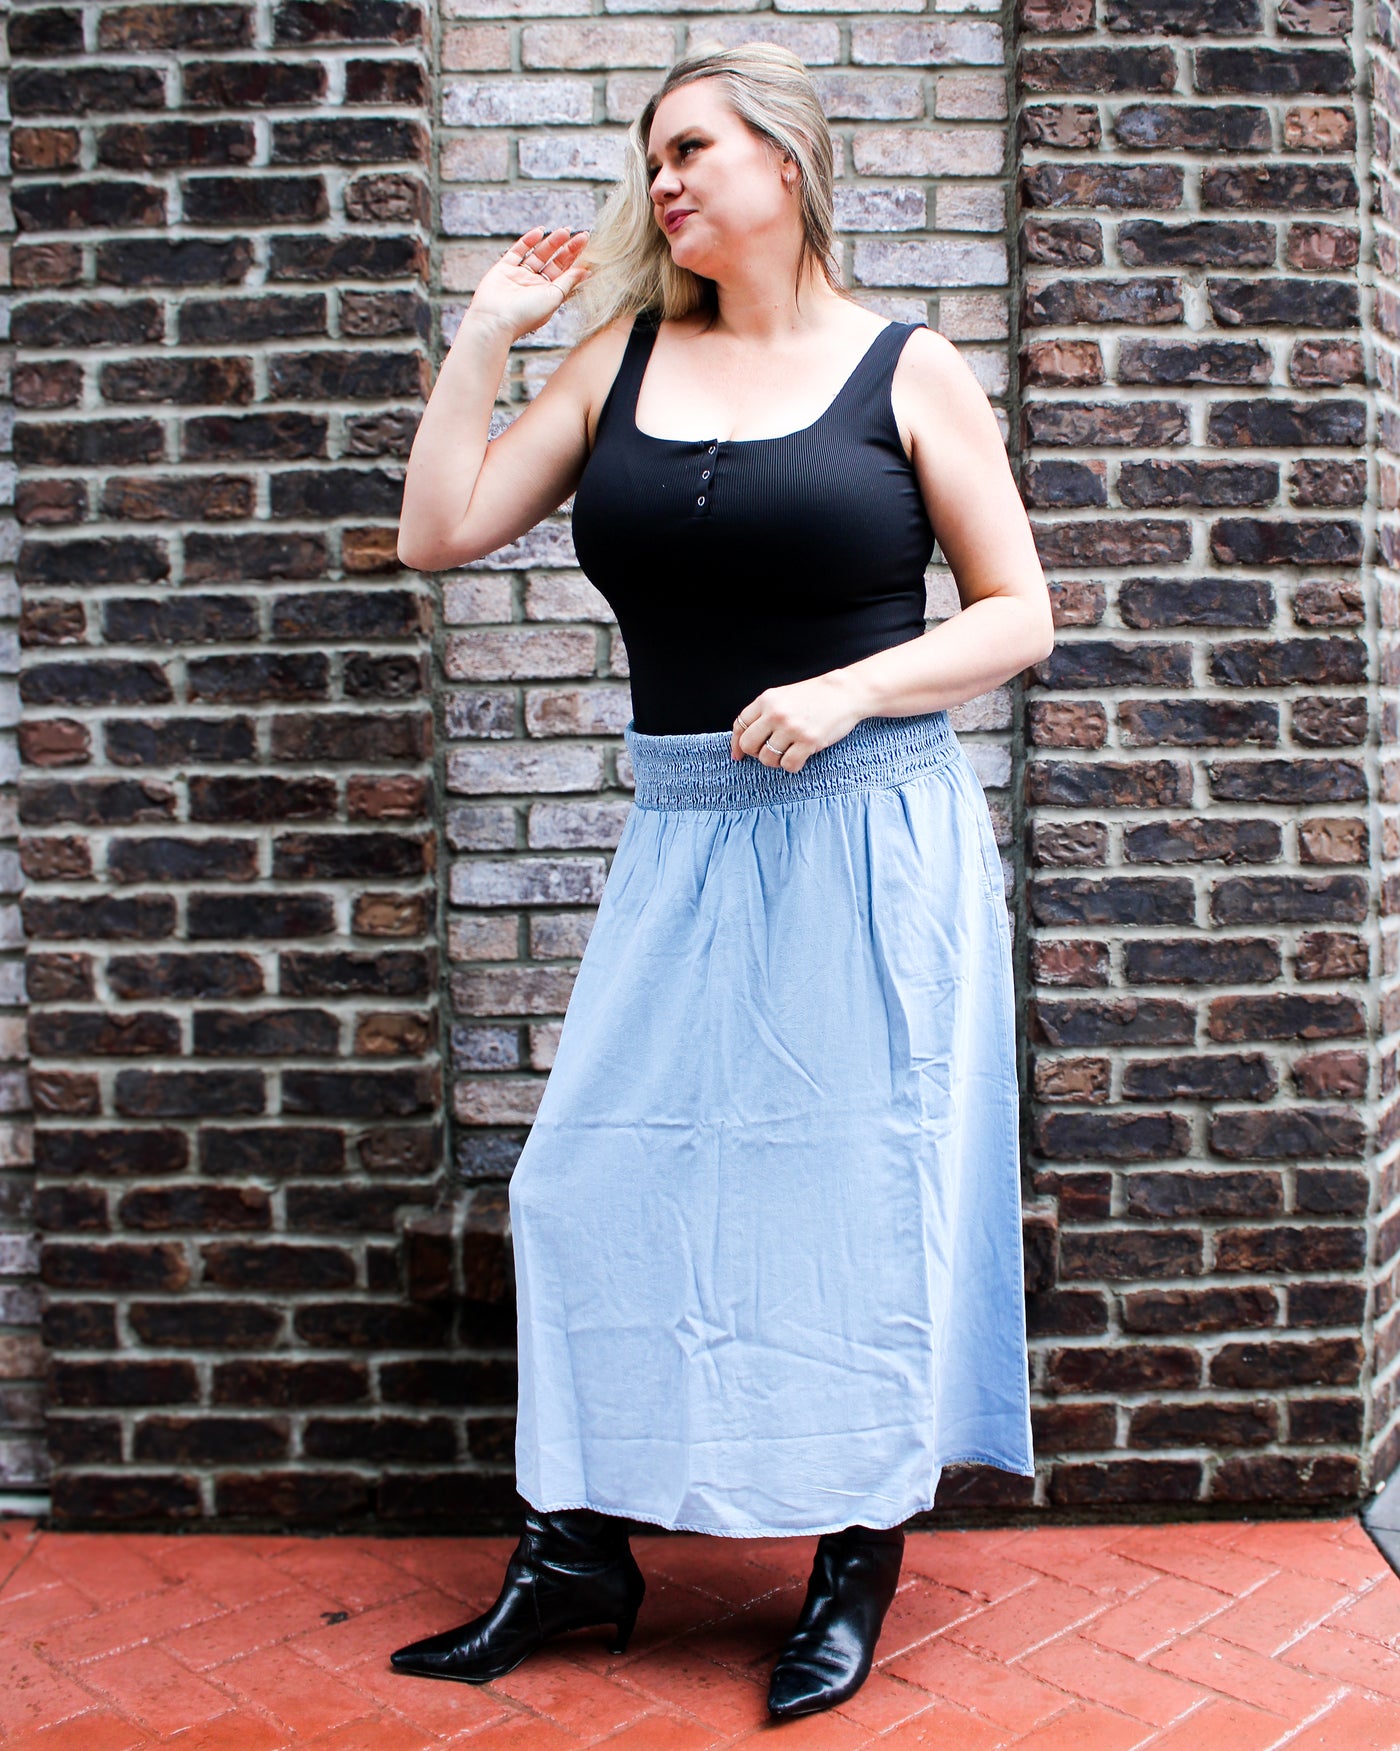 Suzanne Smocked Dress / Skirt